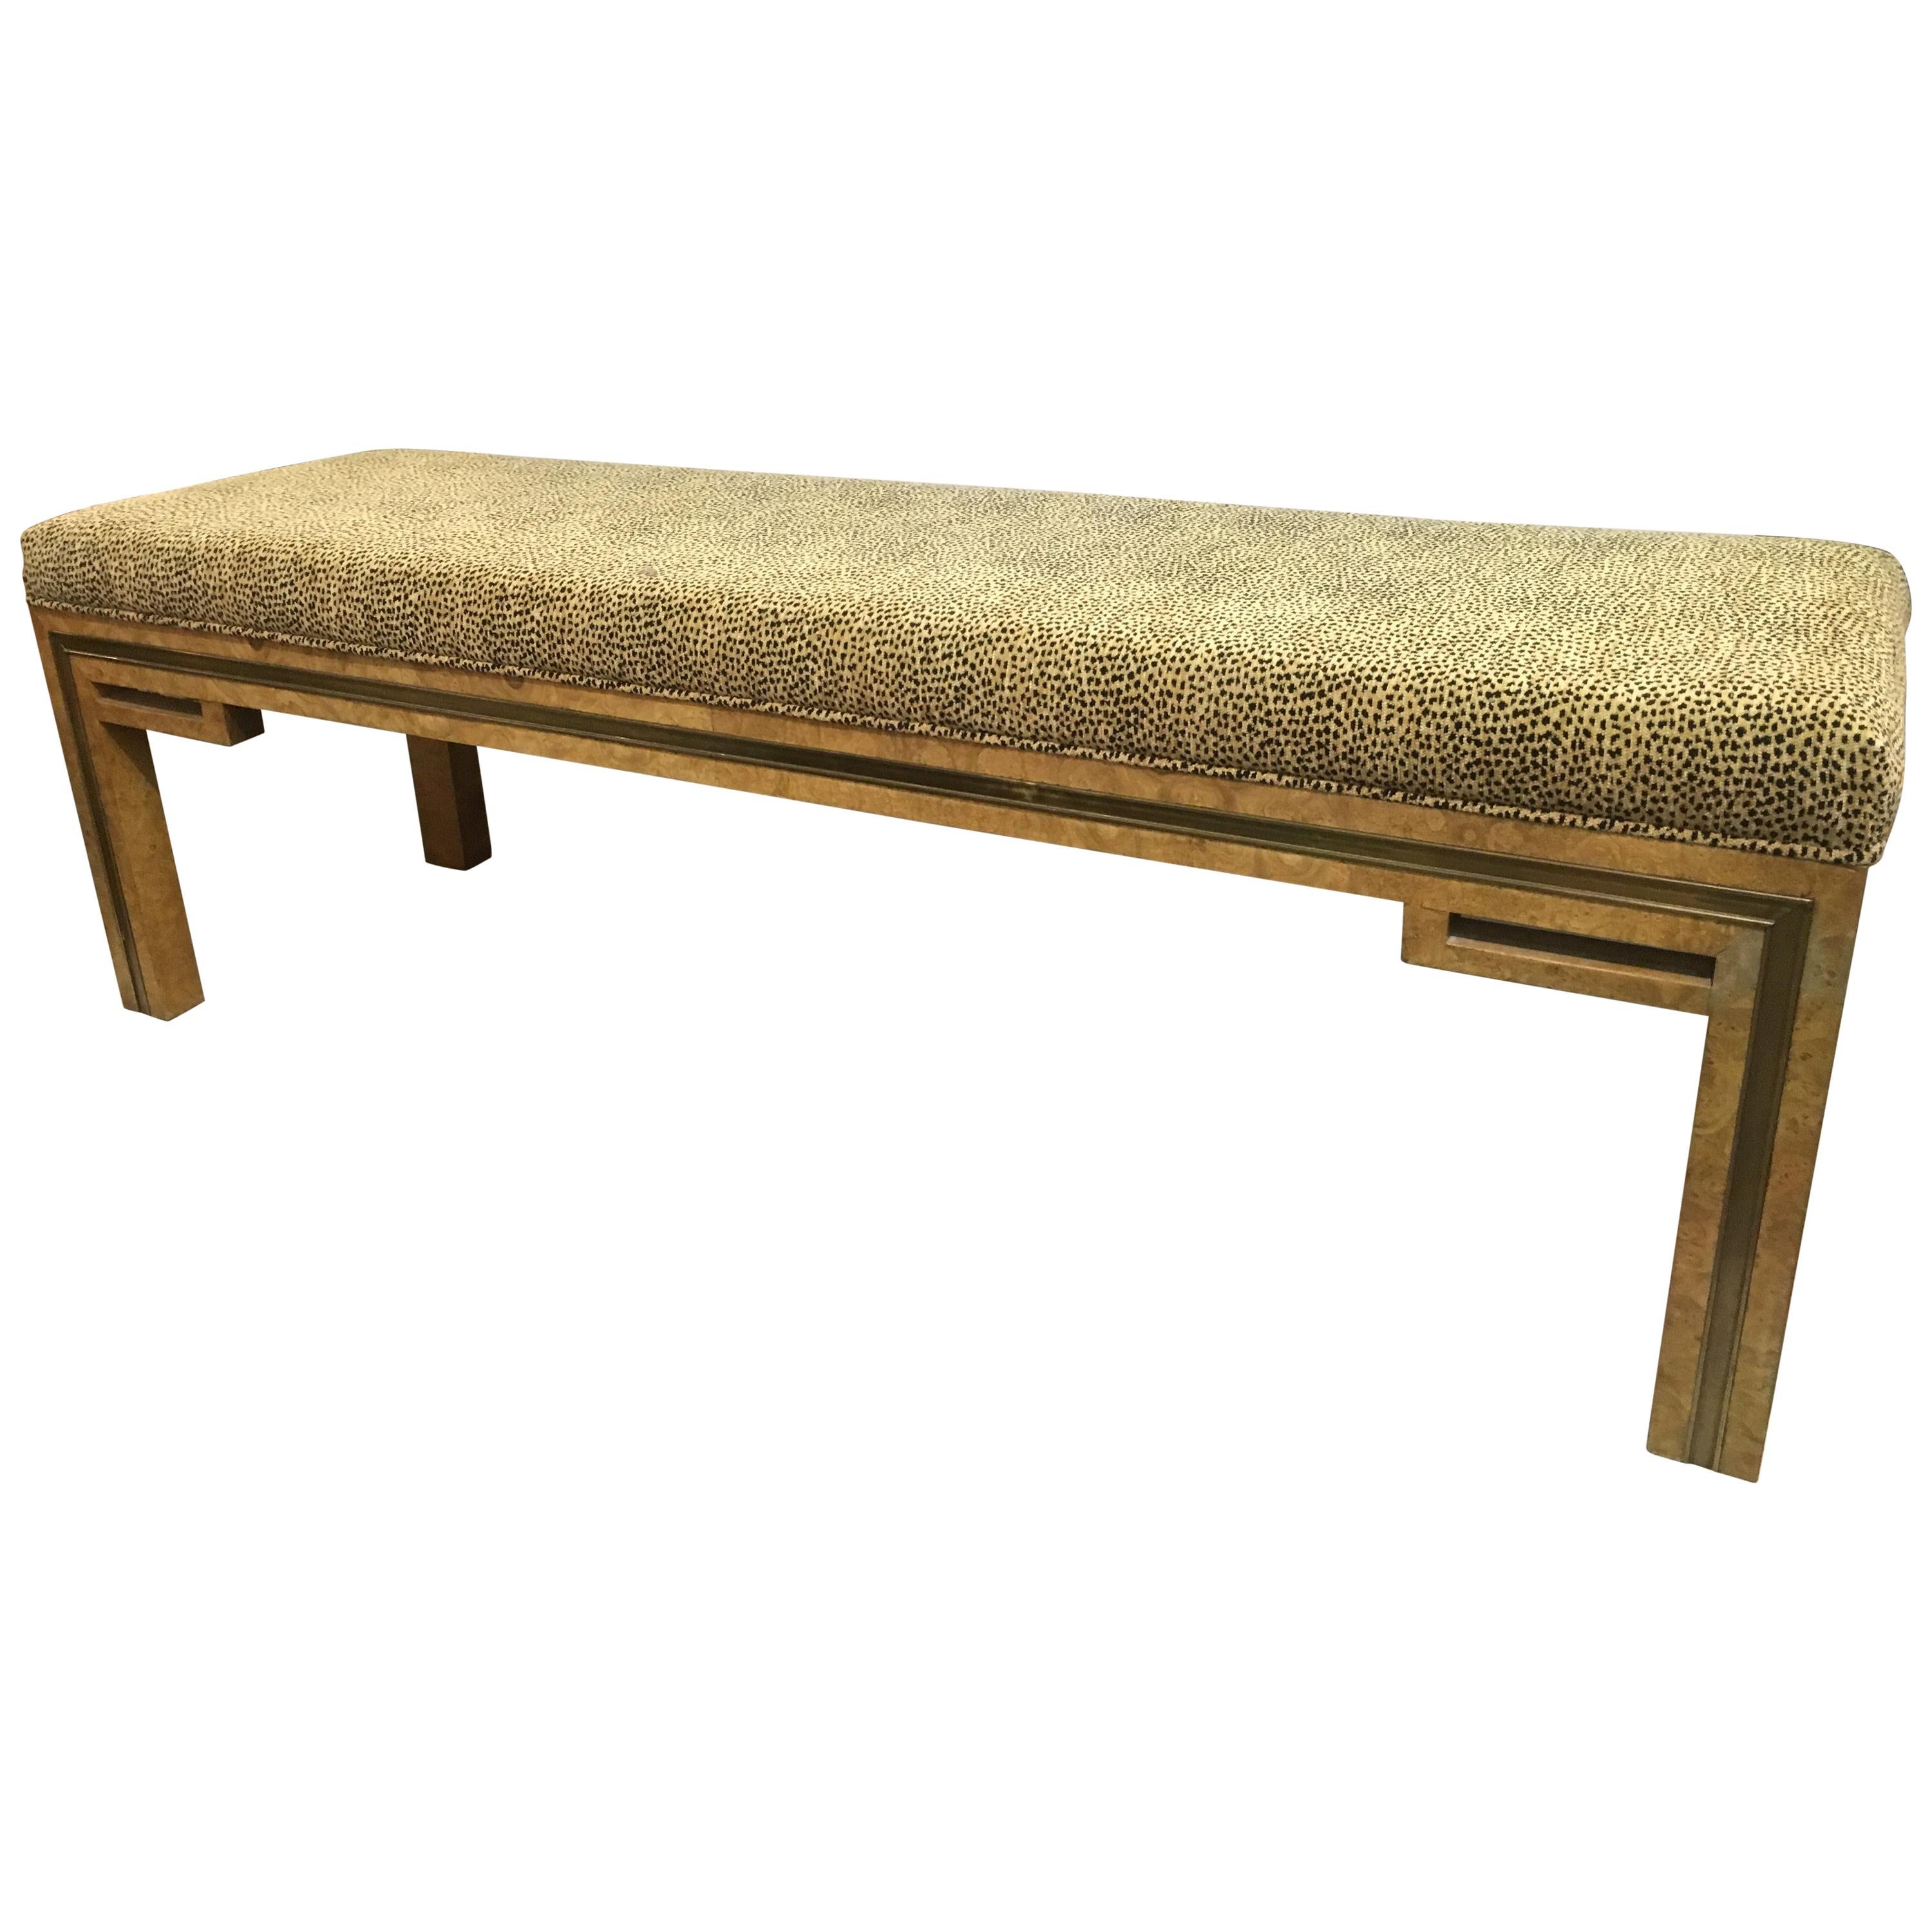 Mastercraft Burl Wood Upholstered Bench